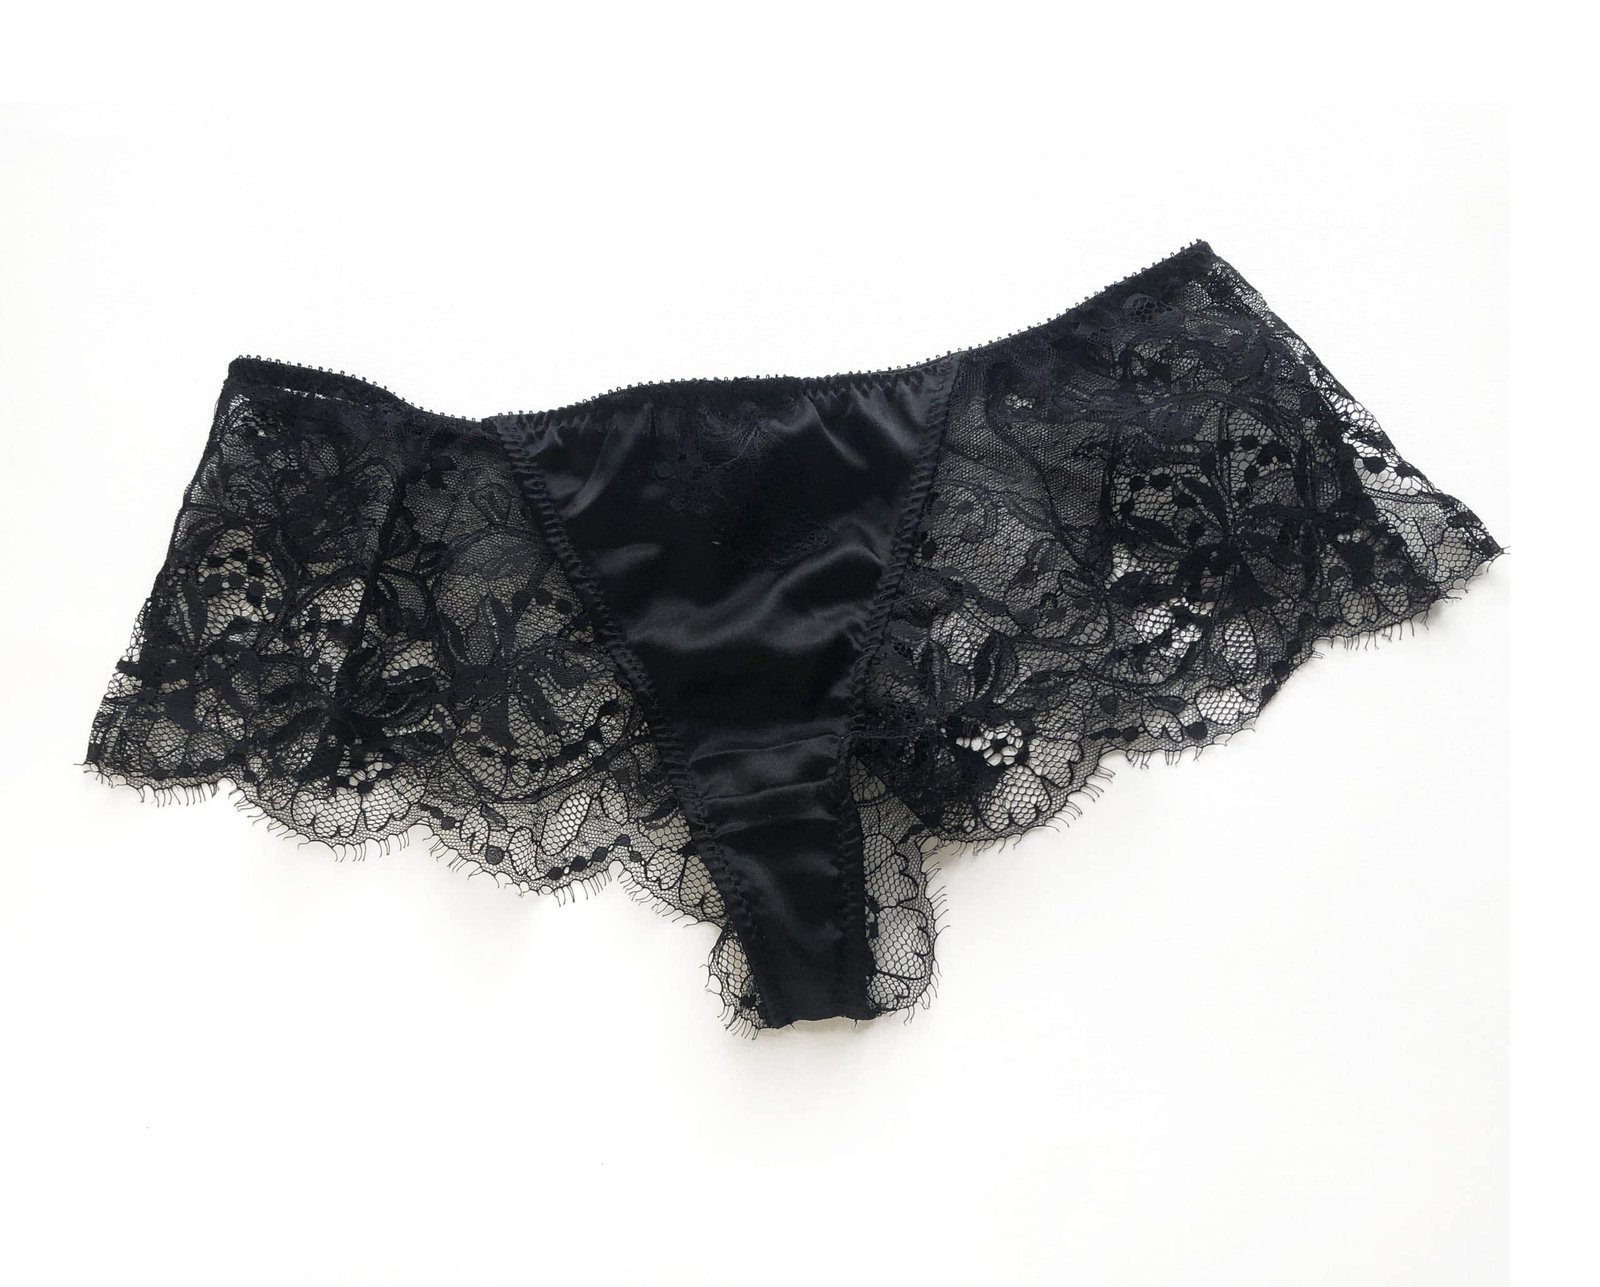 Silk black panties - Black lace panties - Lace brief - Lace tanga - Black  lingerie - Marianna Giordana Paris